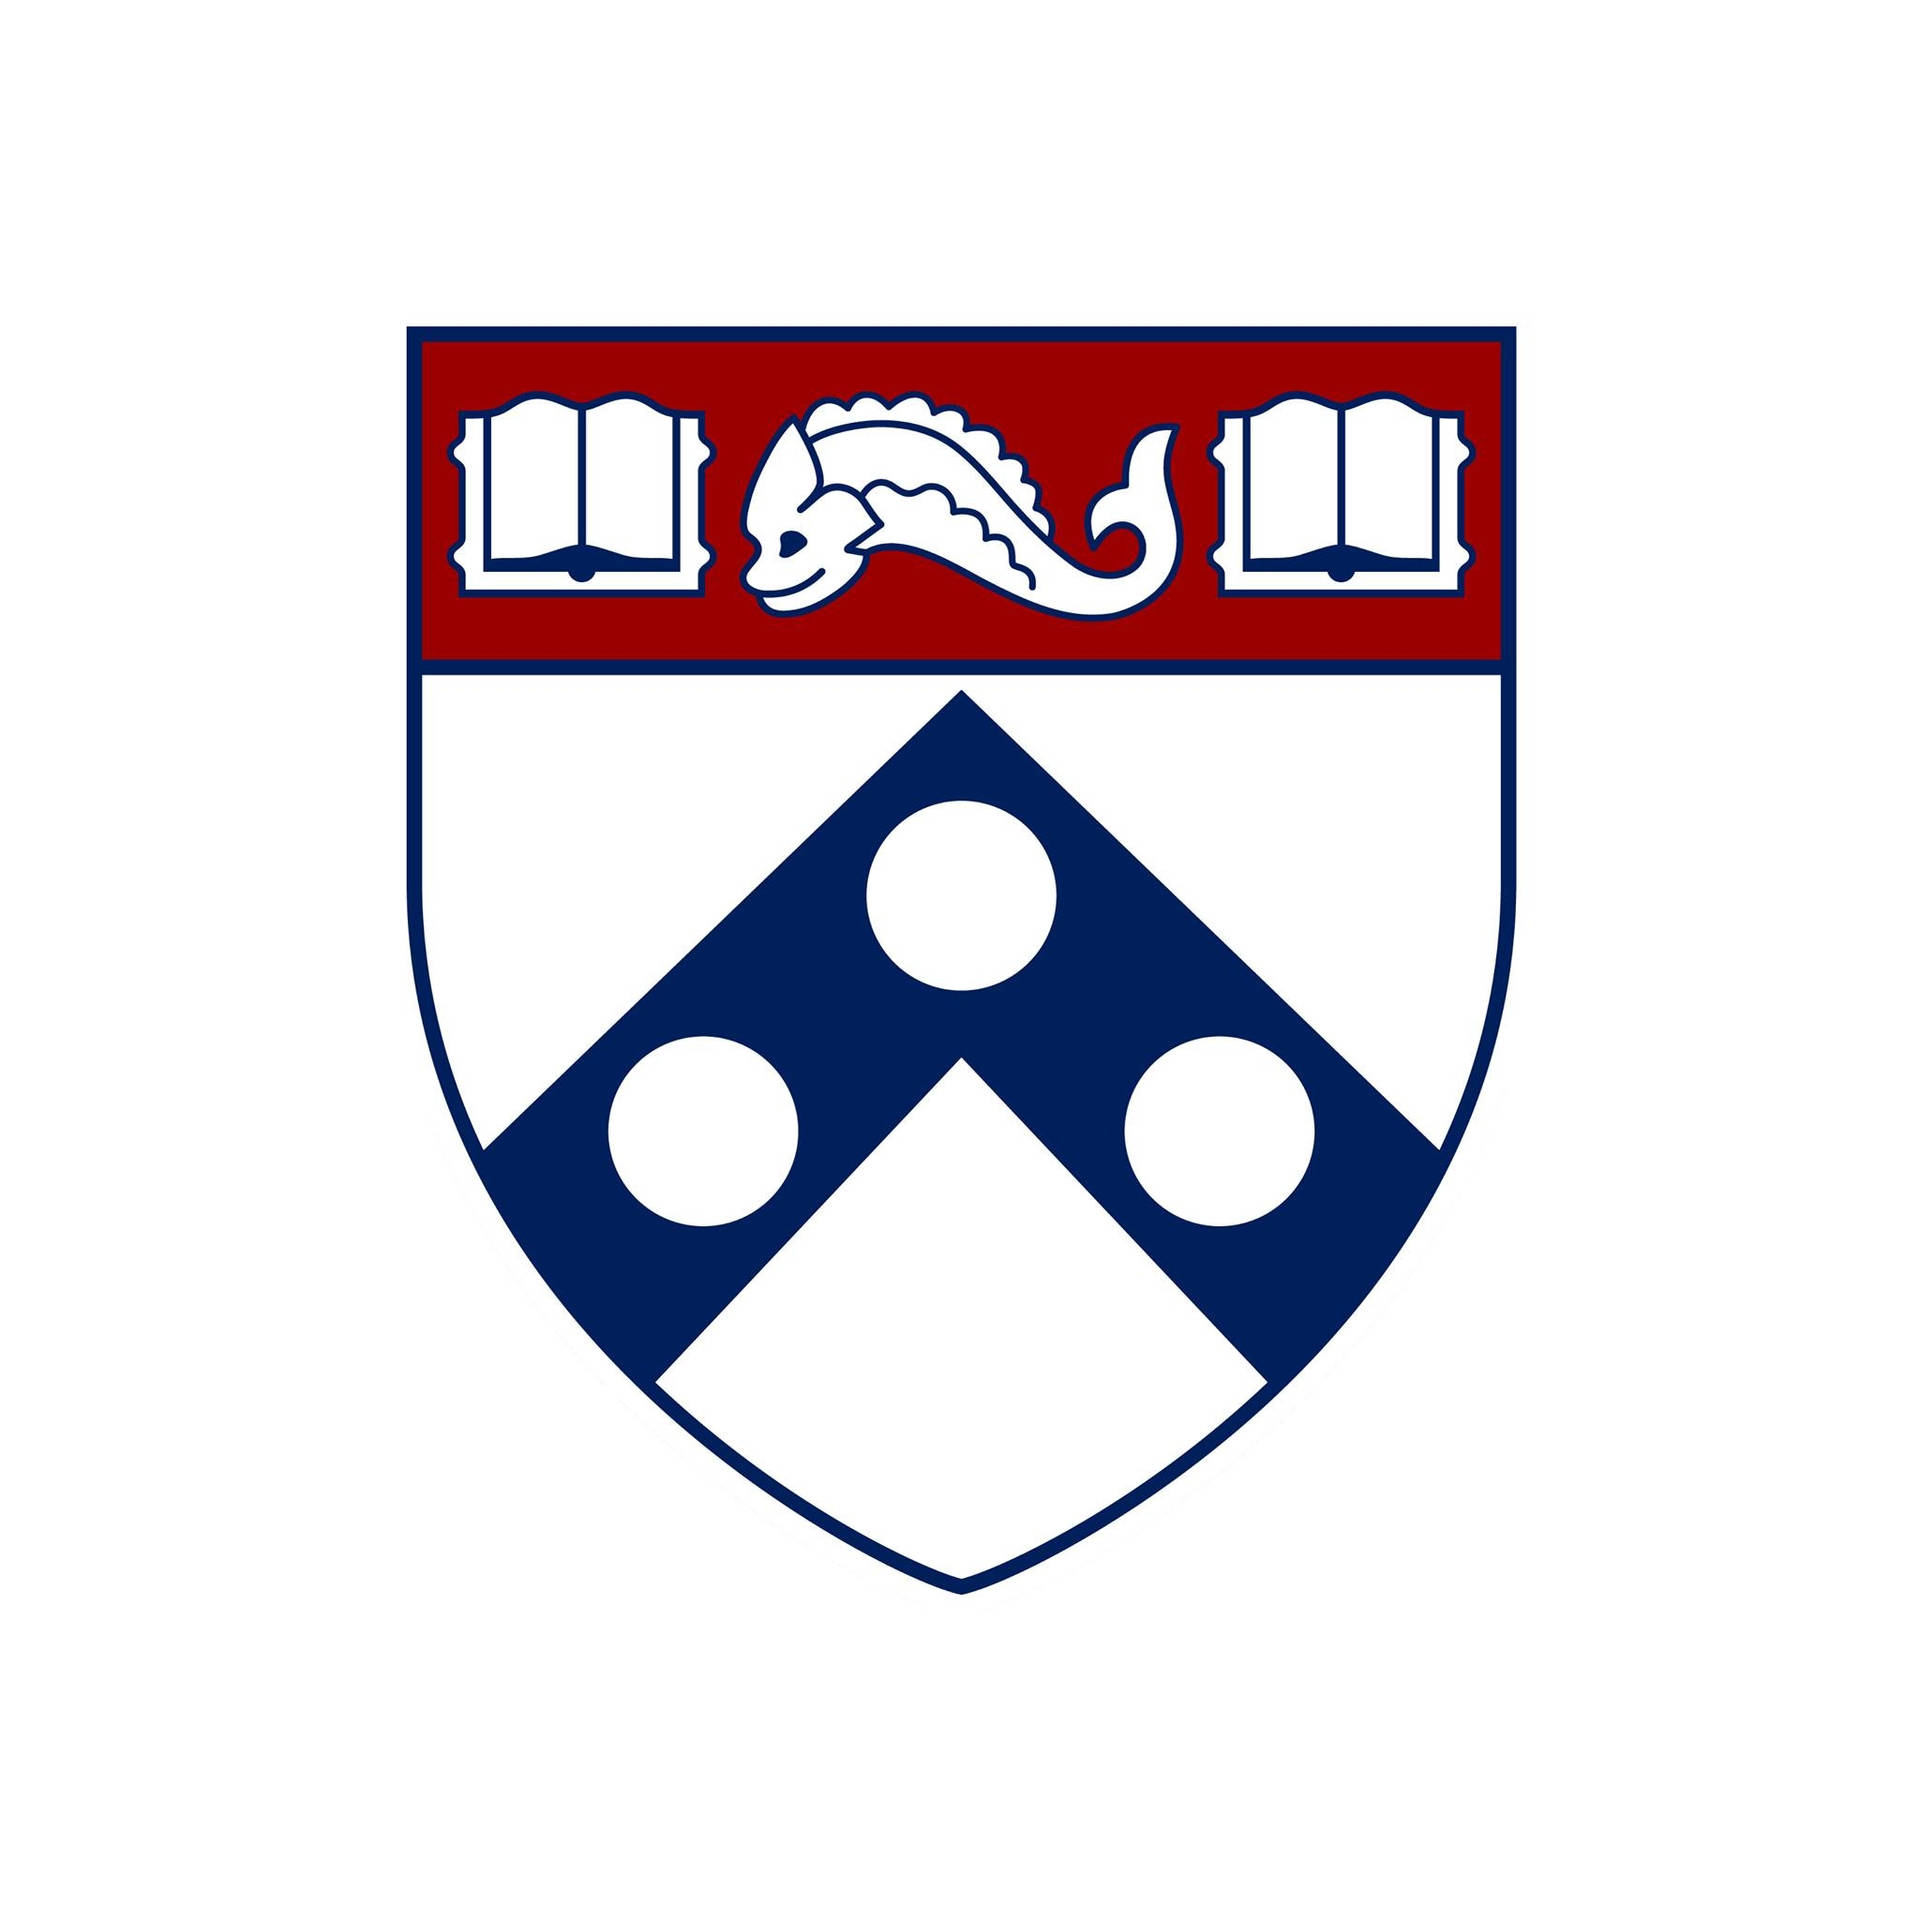 Logotipodel Escudo De La Universidad De Pennsylvania Fondo de pantalla